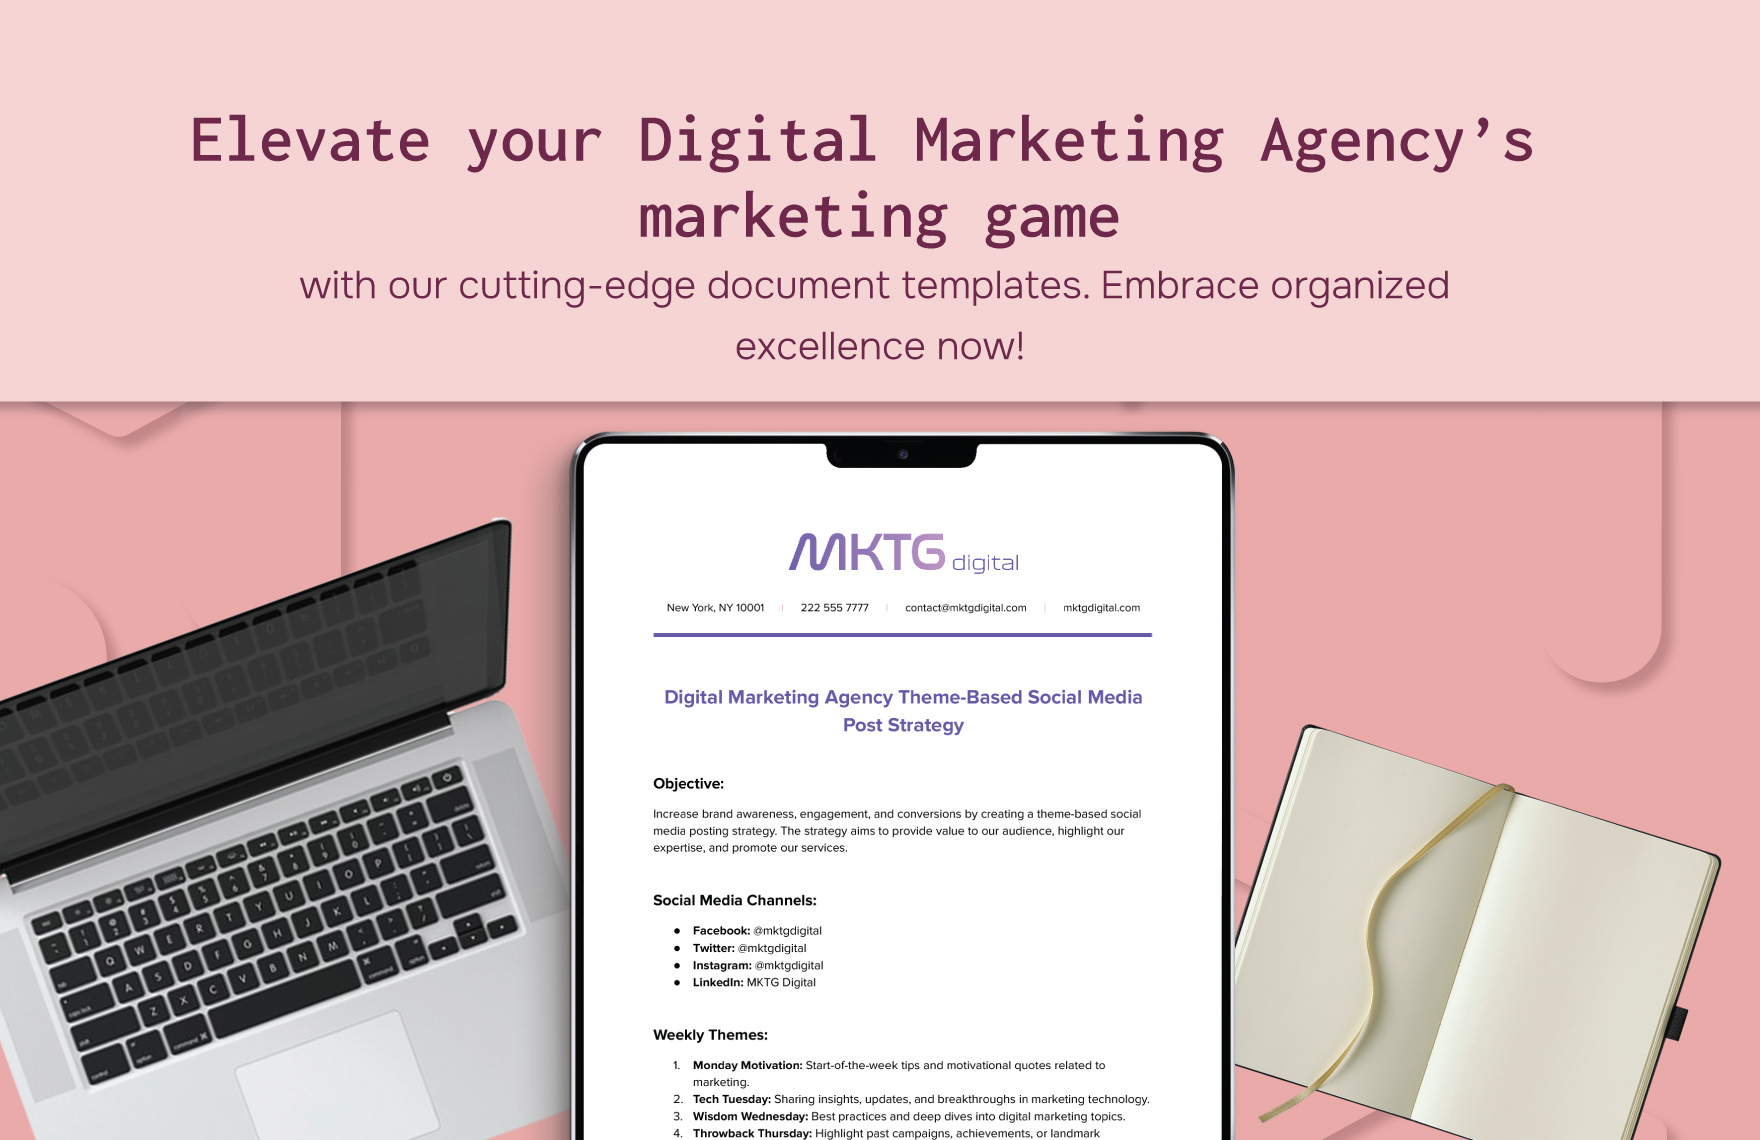 Digital Marketing Agency Theme-Based Social Media Post Strategy Template